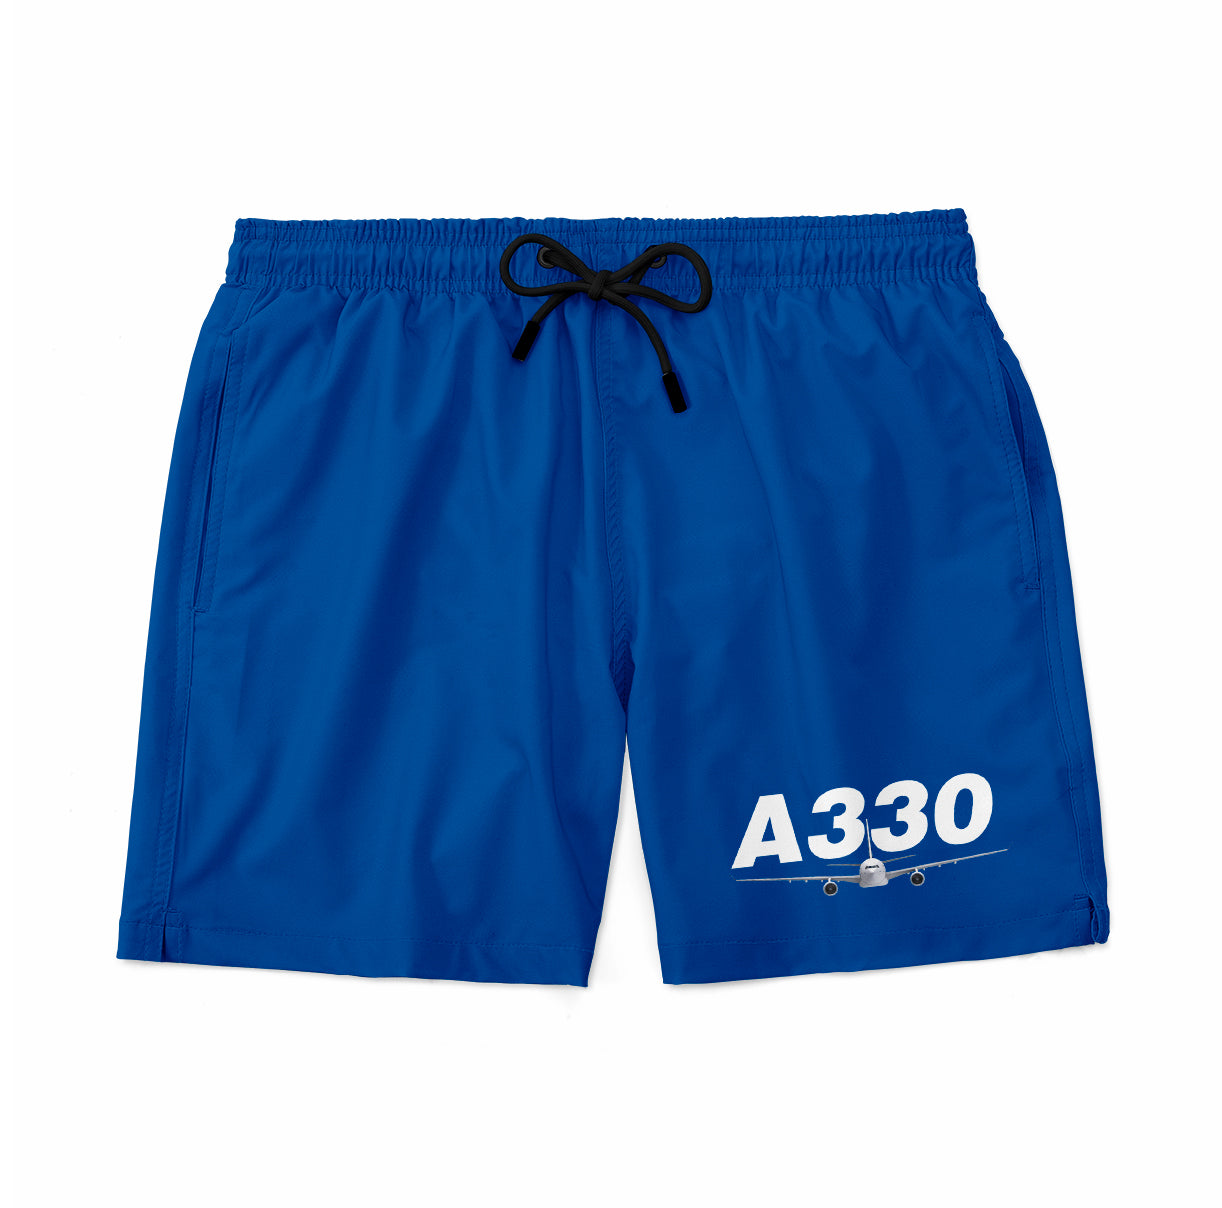 Super Airbus A330 Designed Swim Trunks & Shorts